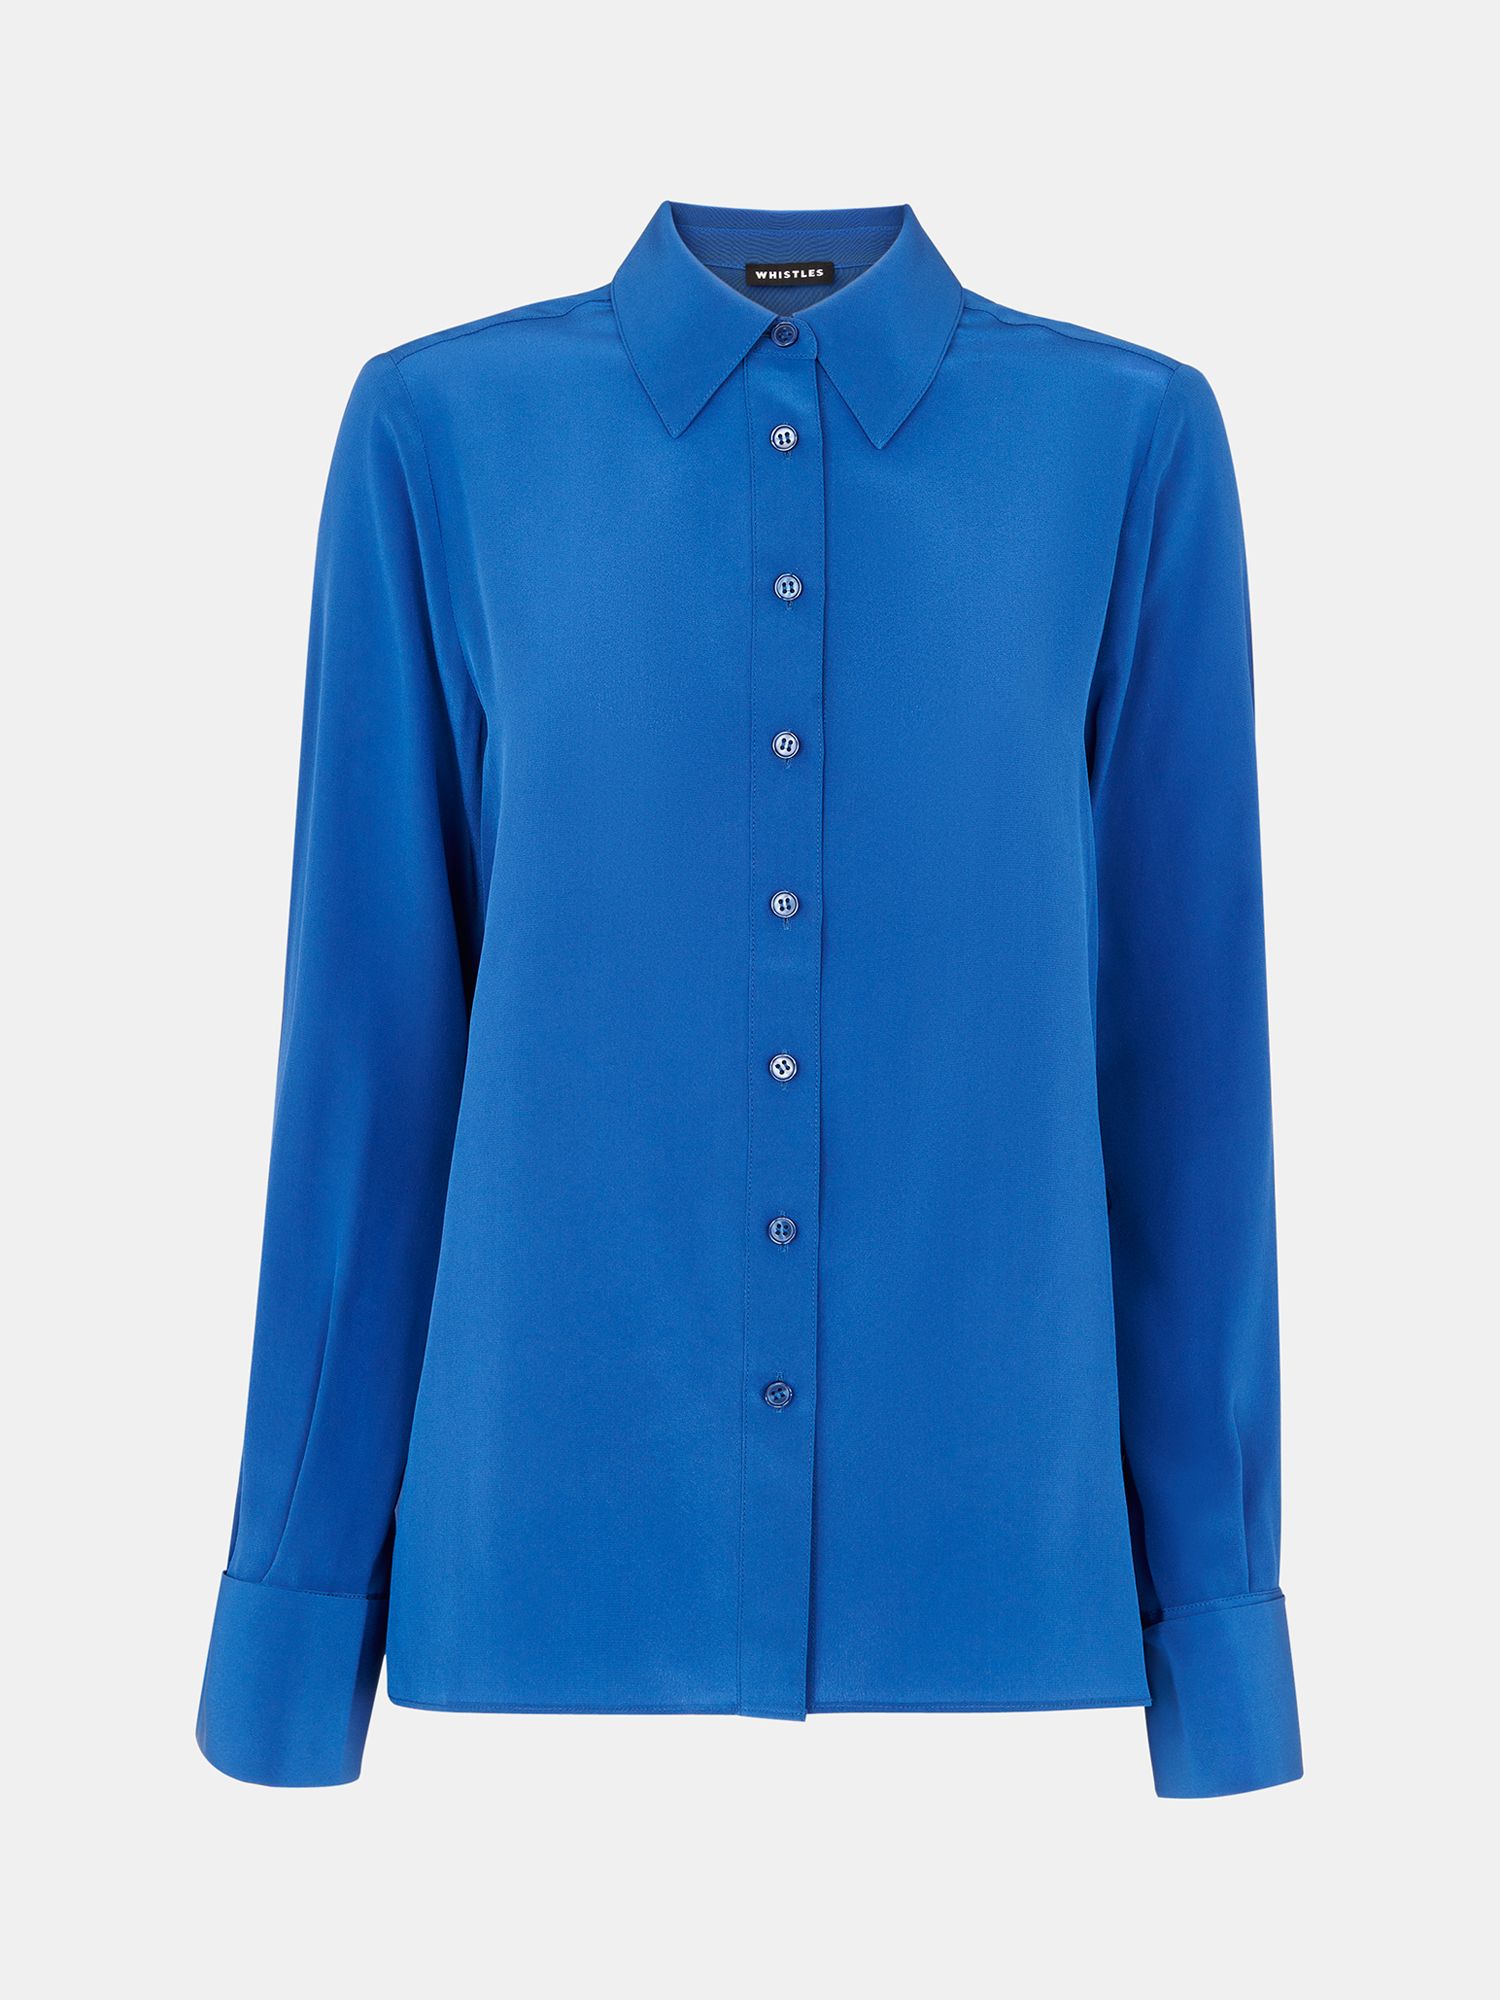 Whistles Ultimate Silk Shirt, Blue at John Lewis & Partners